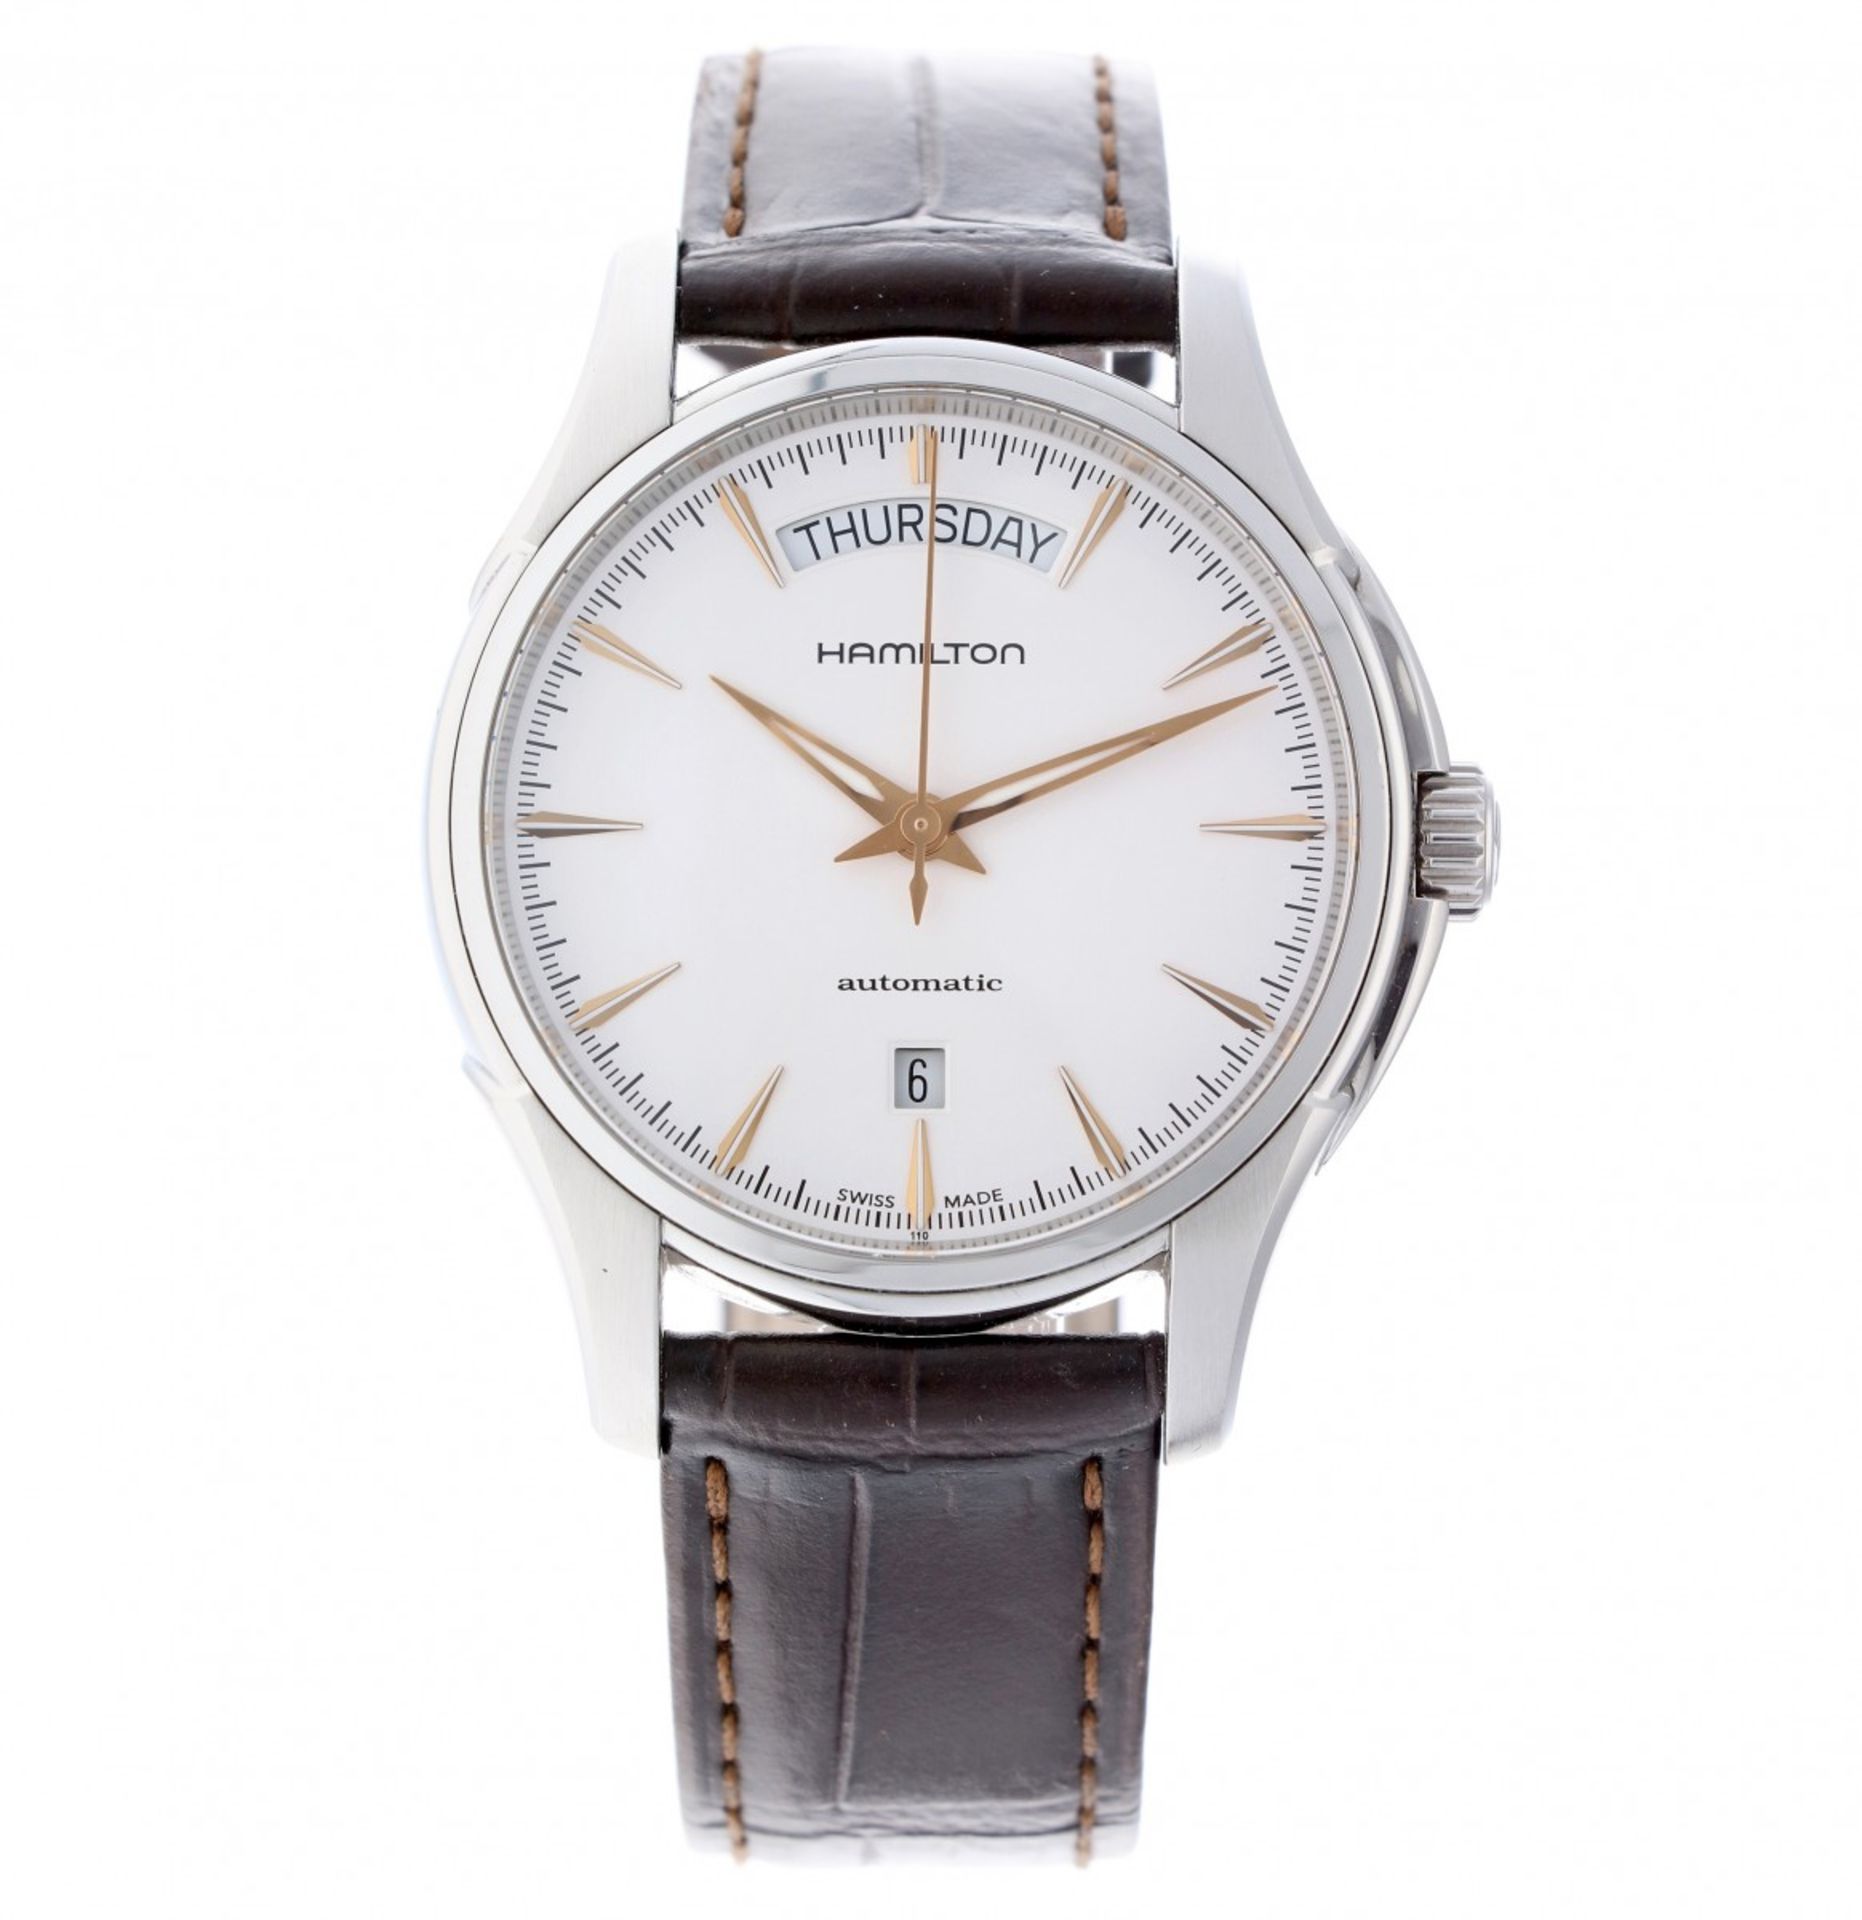 Hamilton Jazzmaster H325050 - Men's watch - approx. 2018